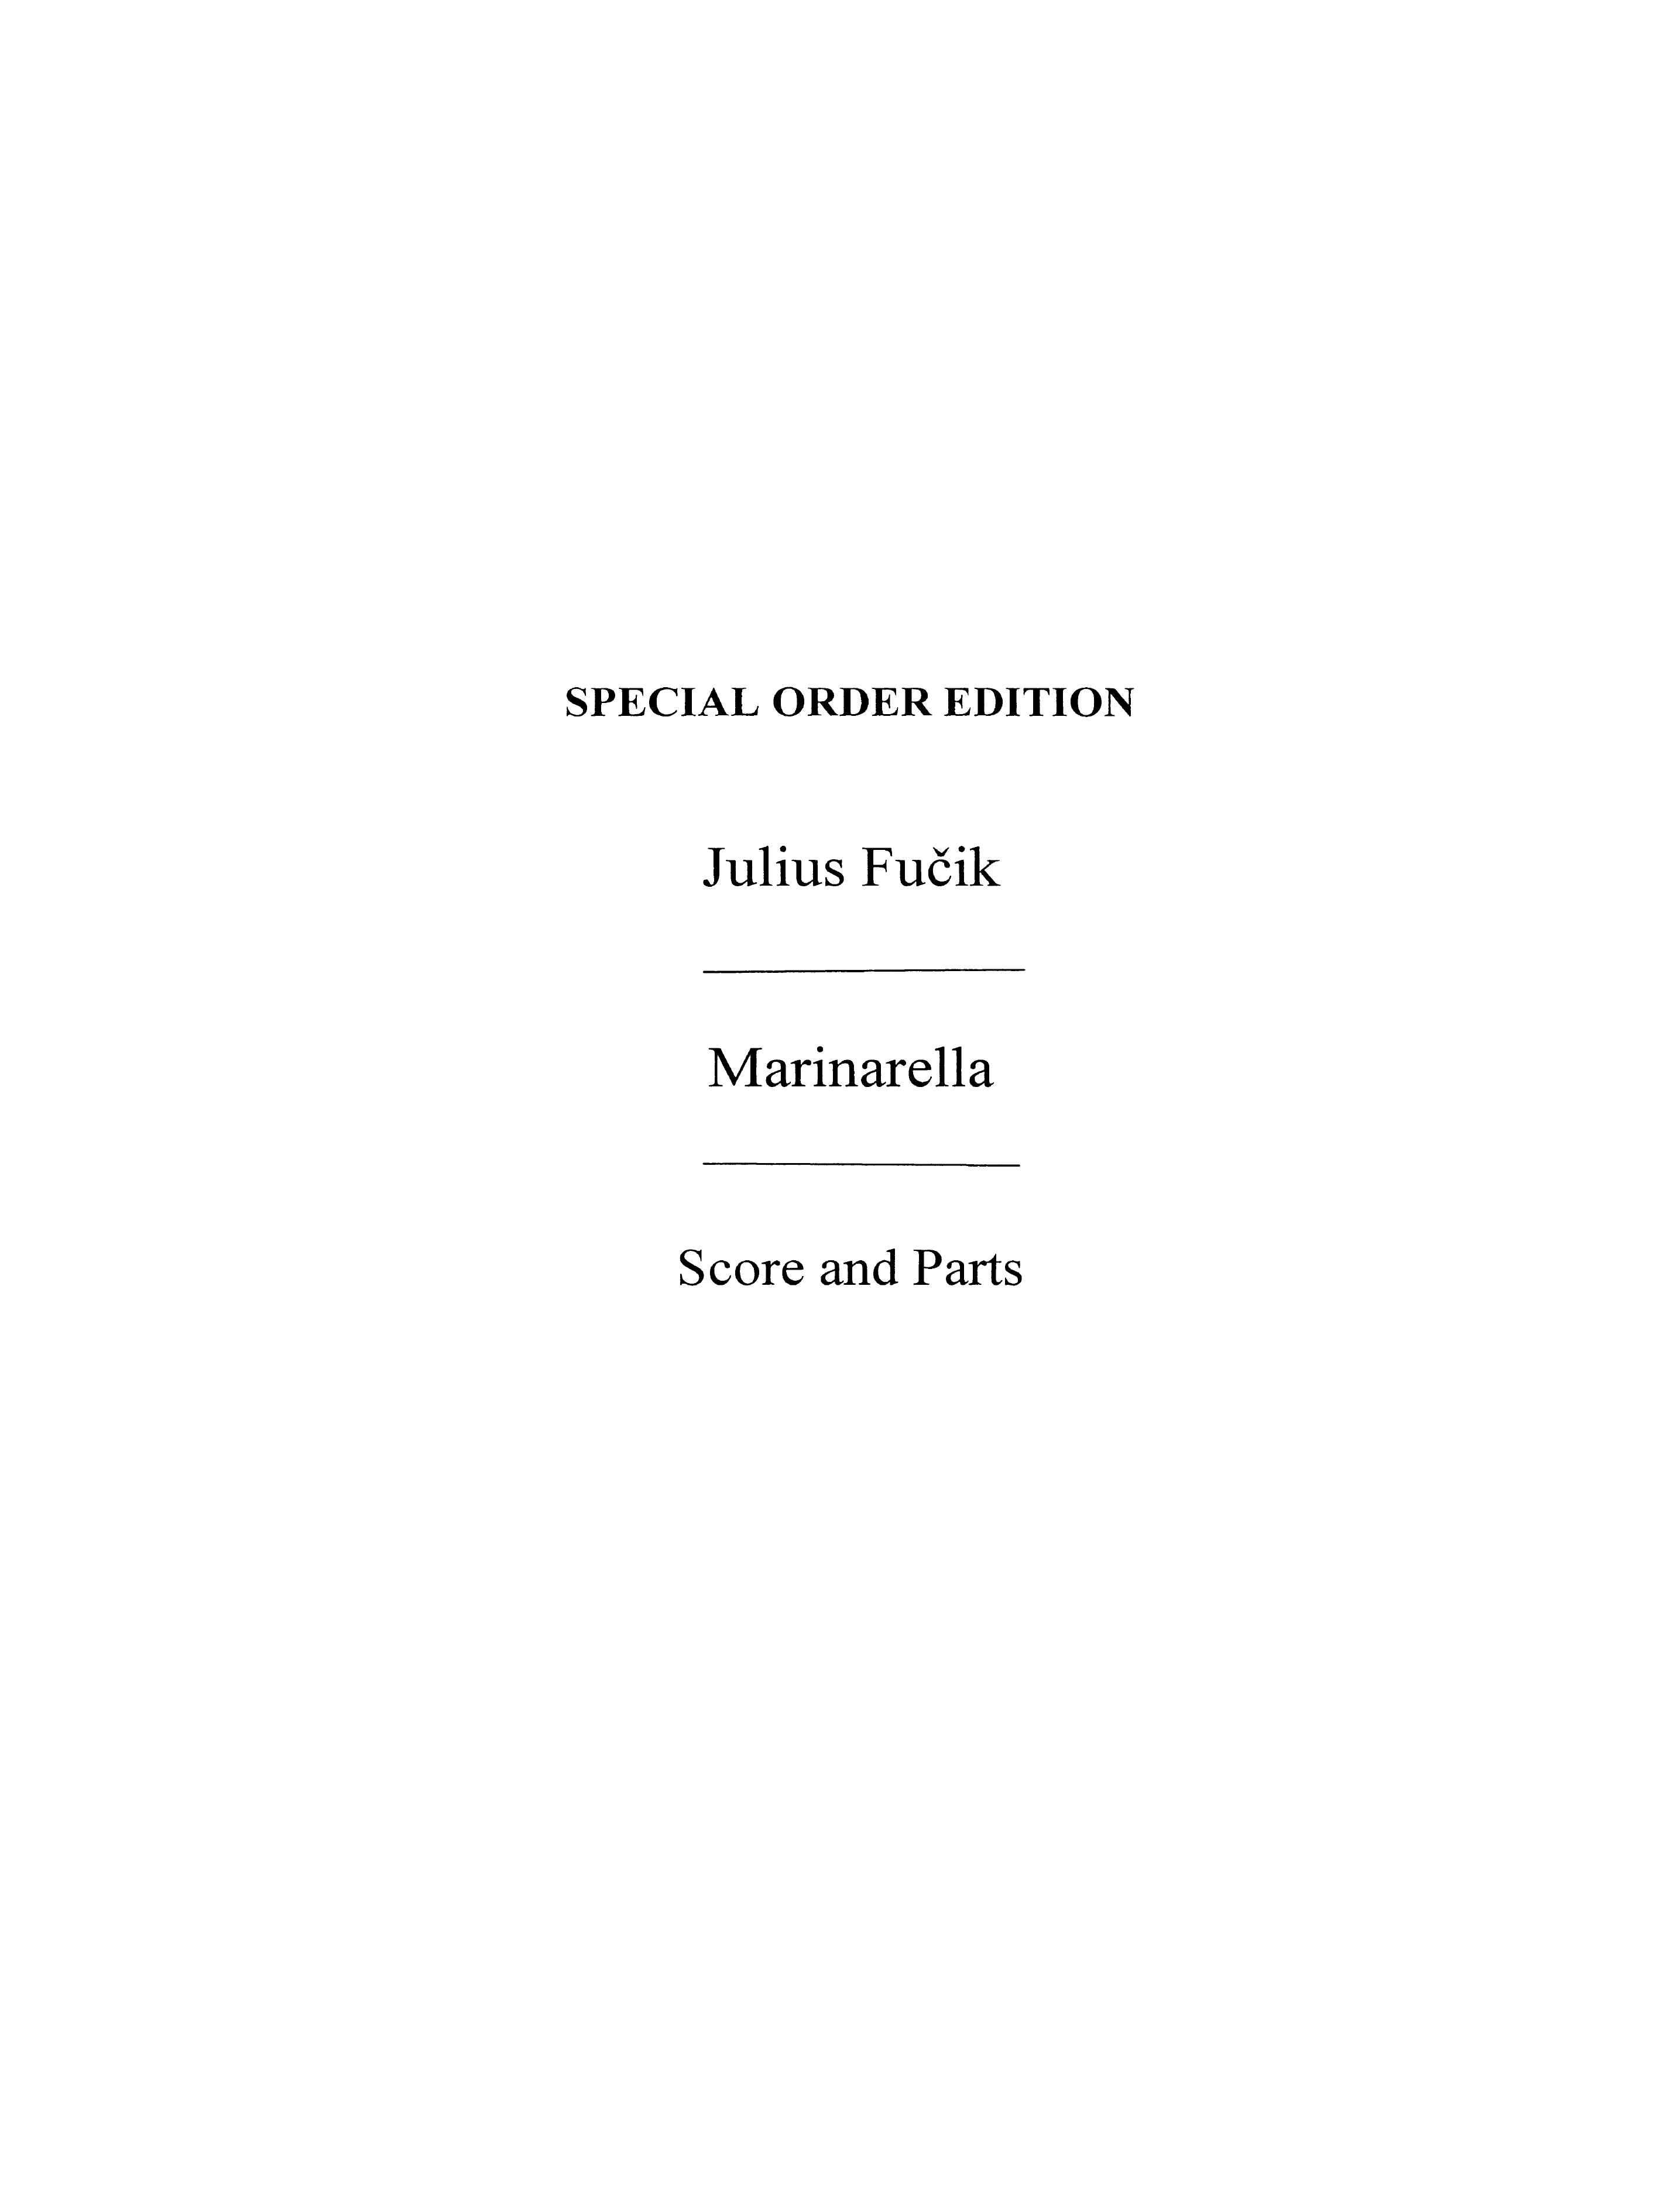 Julius Fucik: Marinarella Overture: Orchestra: Score and Parts